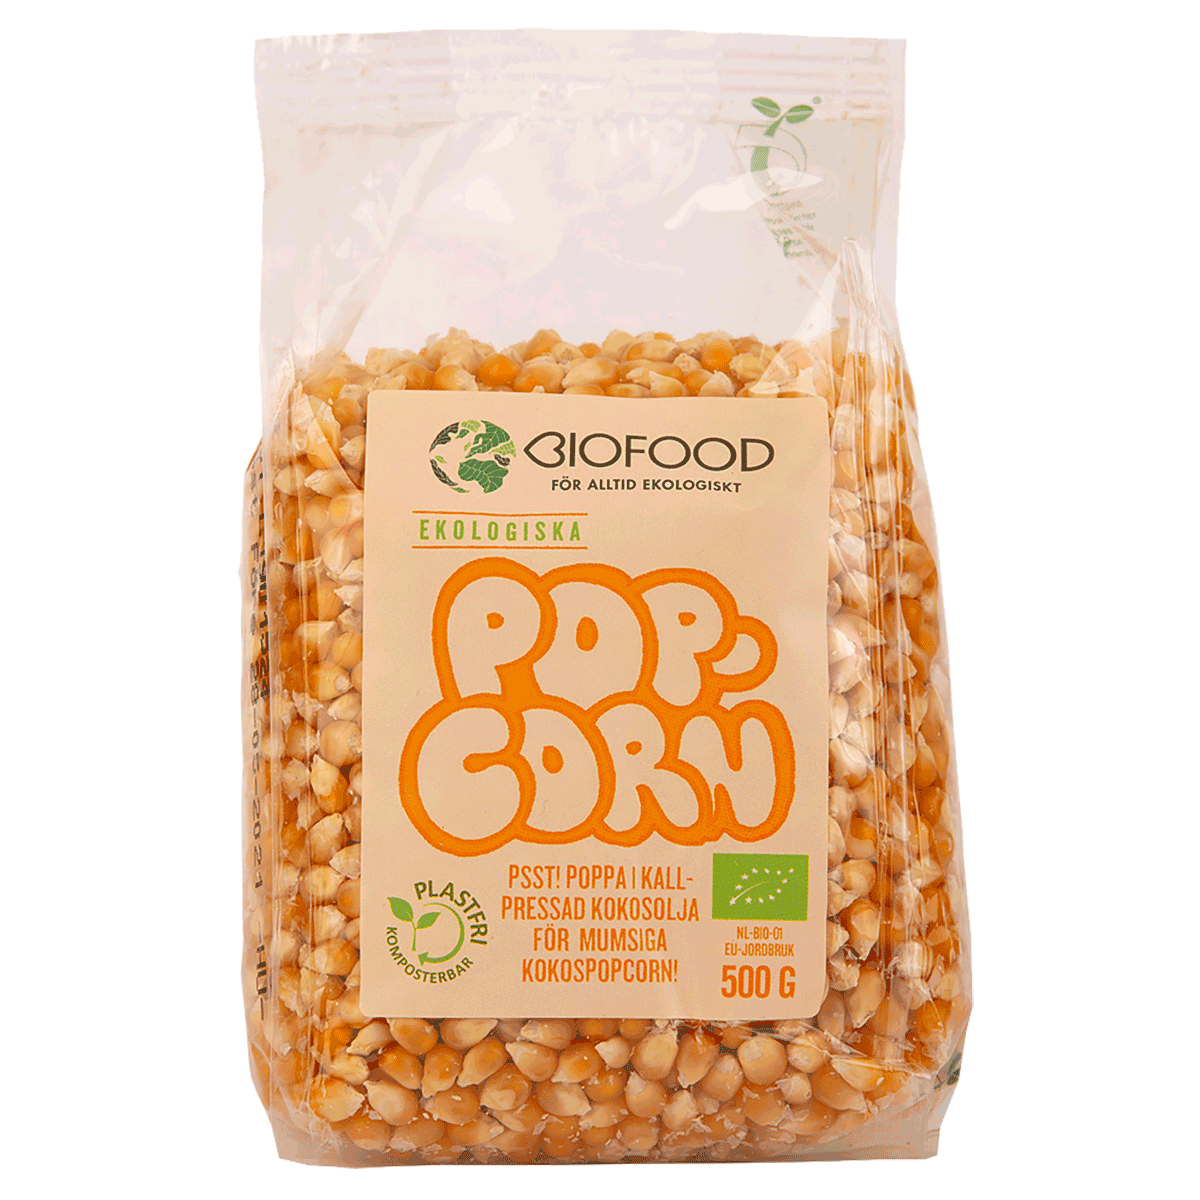 Popcorn aus Biofood